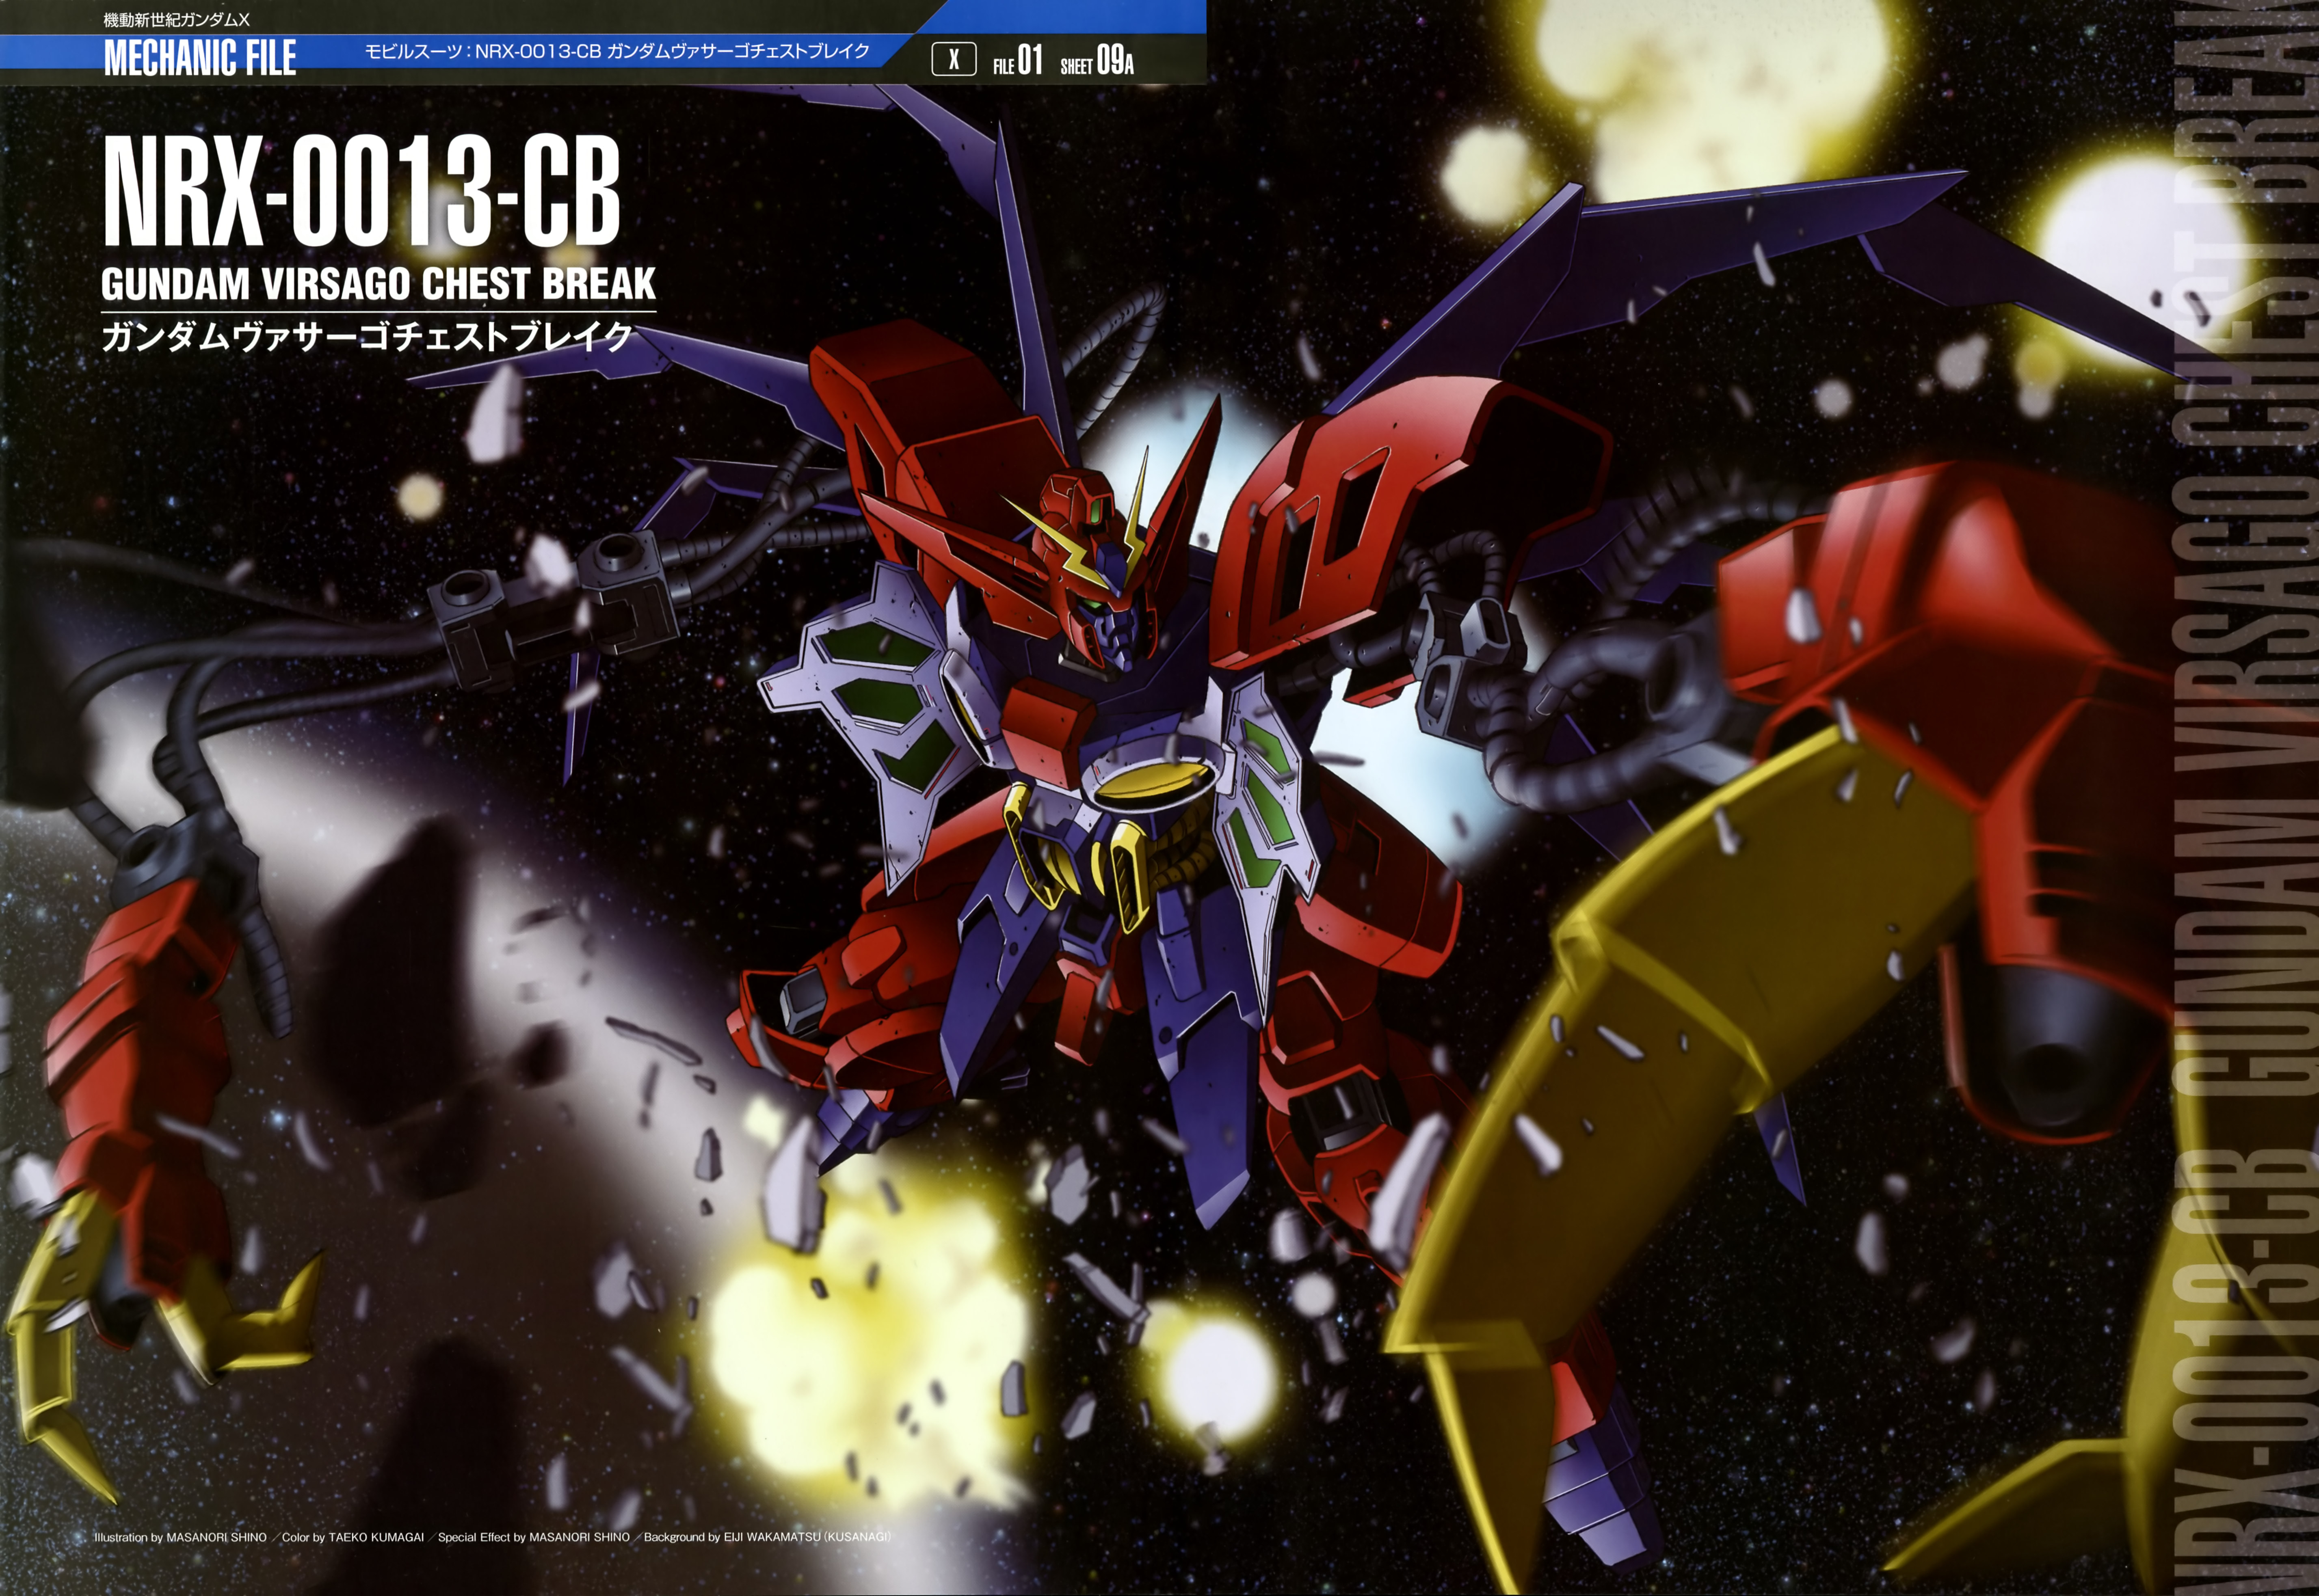 Télécharger des fonds d'écran Kidô Shin Seiki Gundam X HD